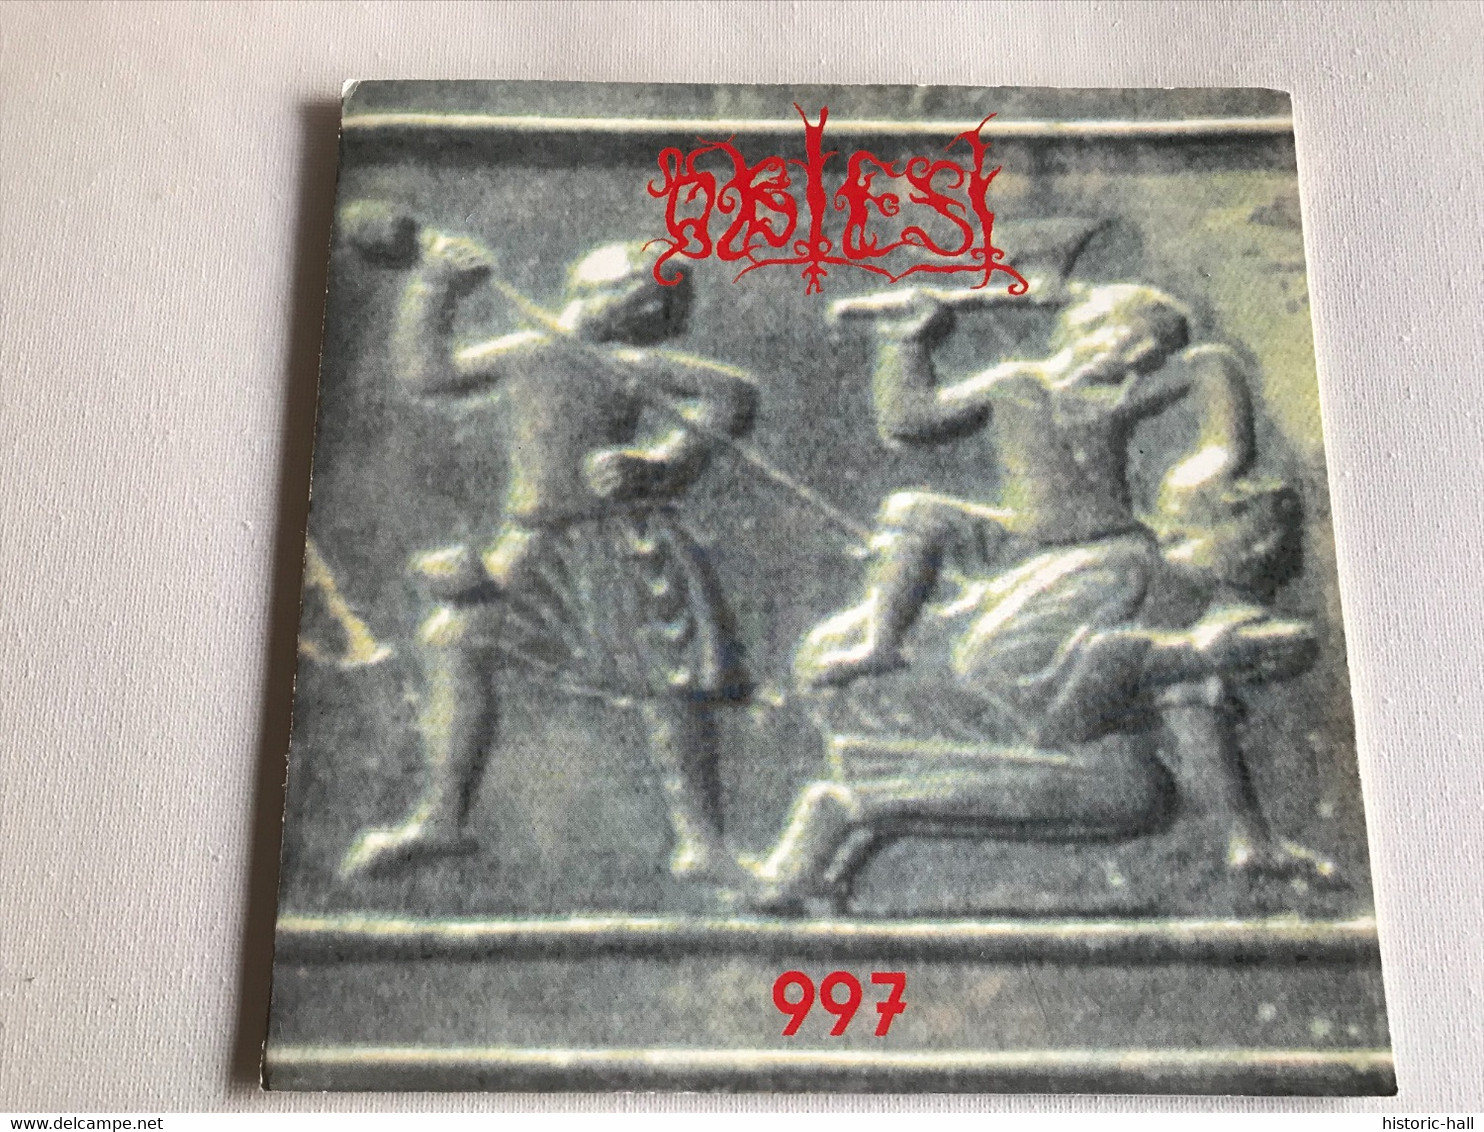 OBTEST - 997 - 45t - 1998 500ex - Hard Rock & Metal